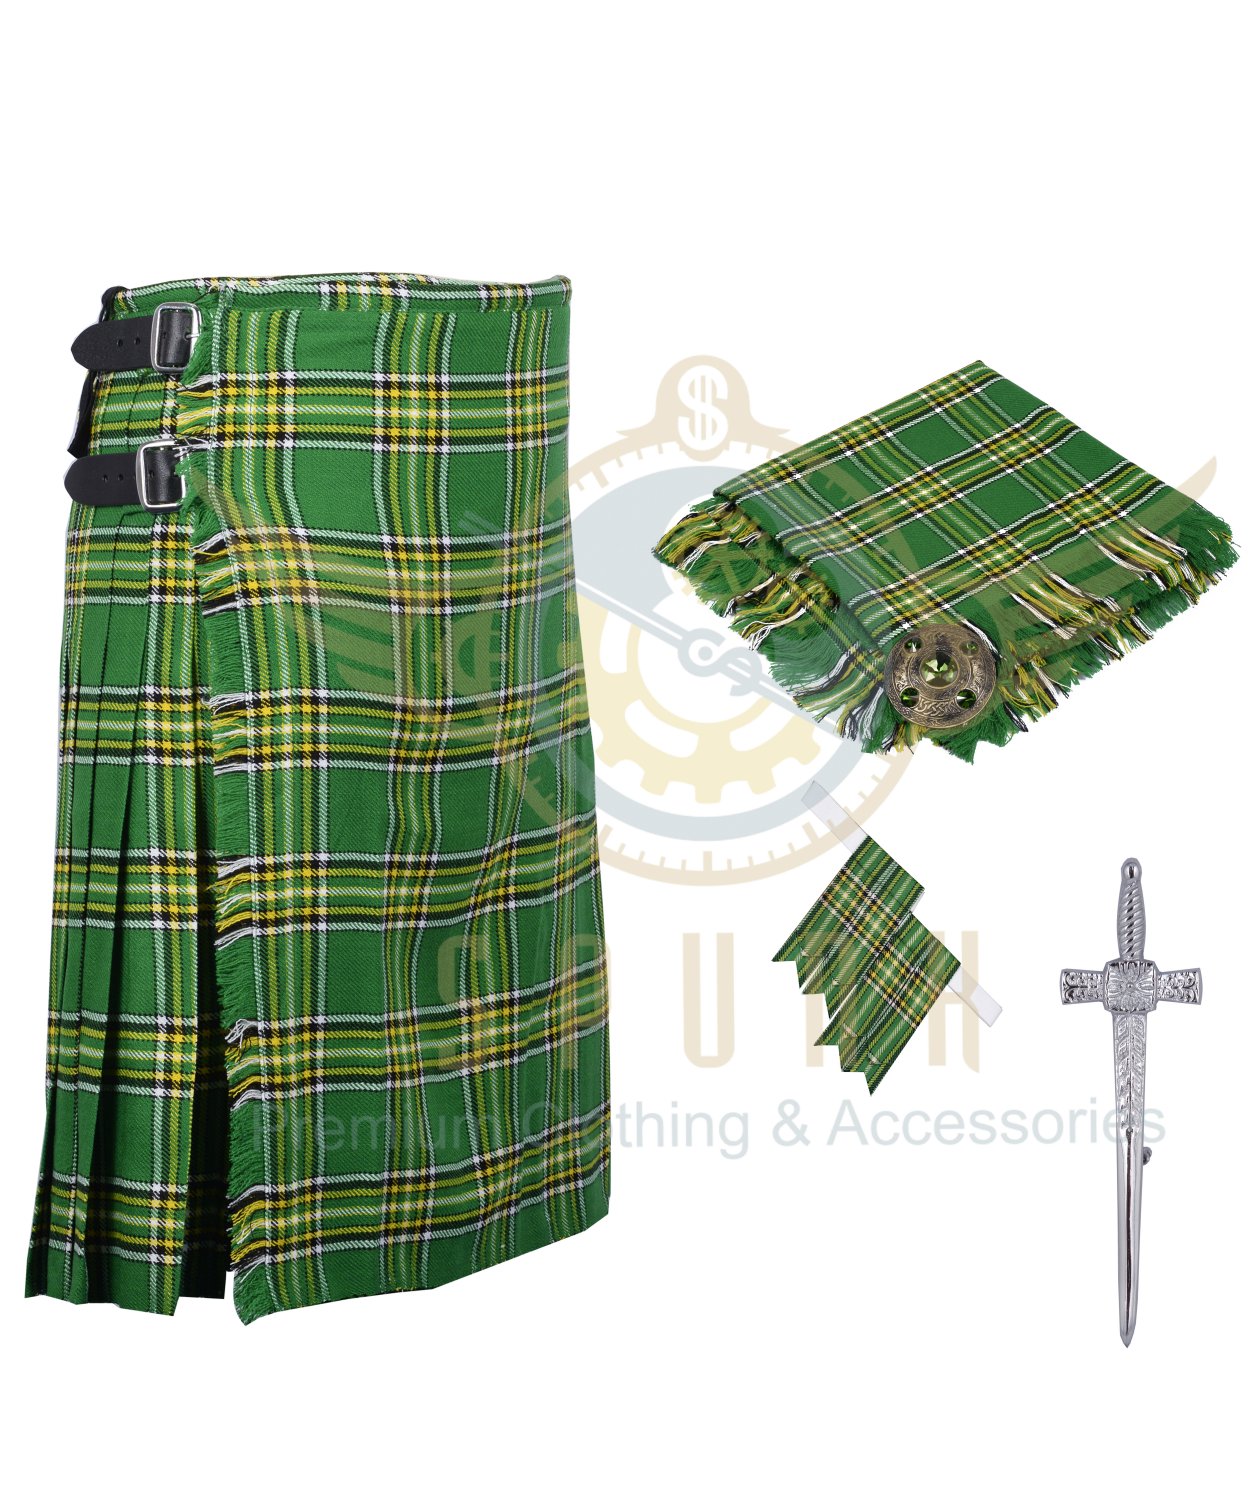 8 Yard Traditional Scottish Kilt For Men Irish Tartan- Free Accessories